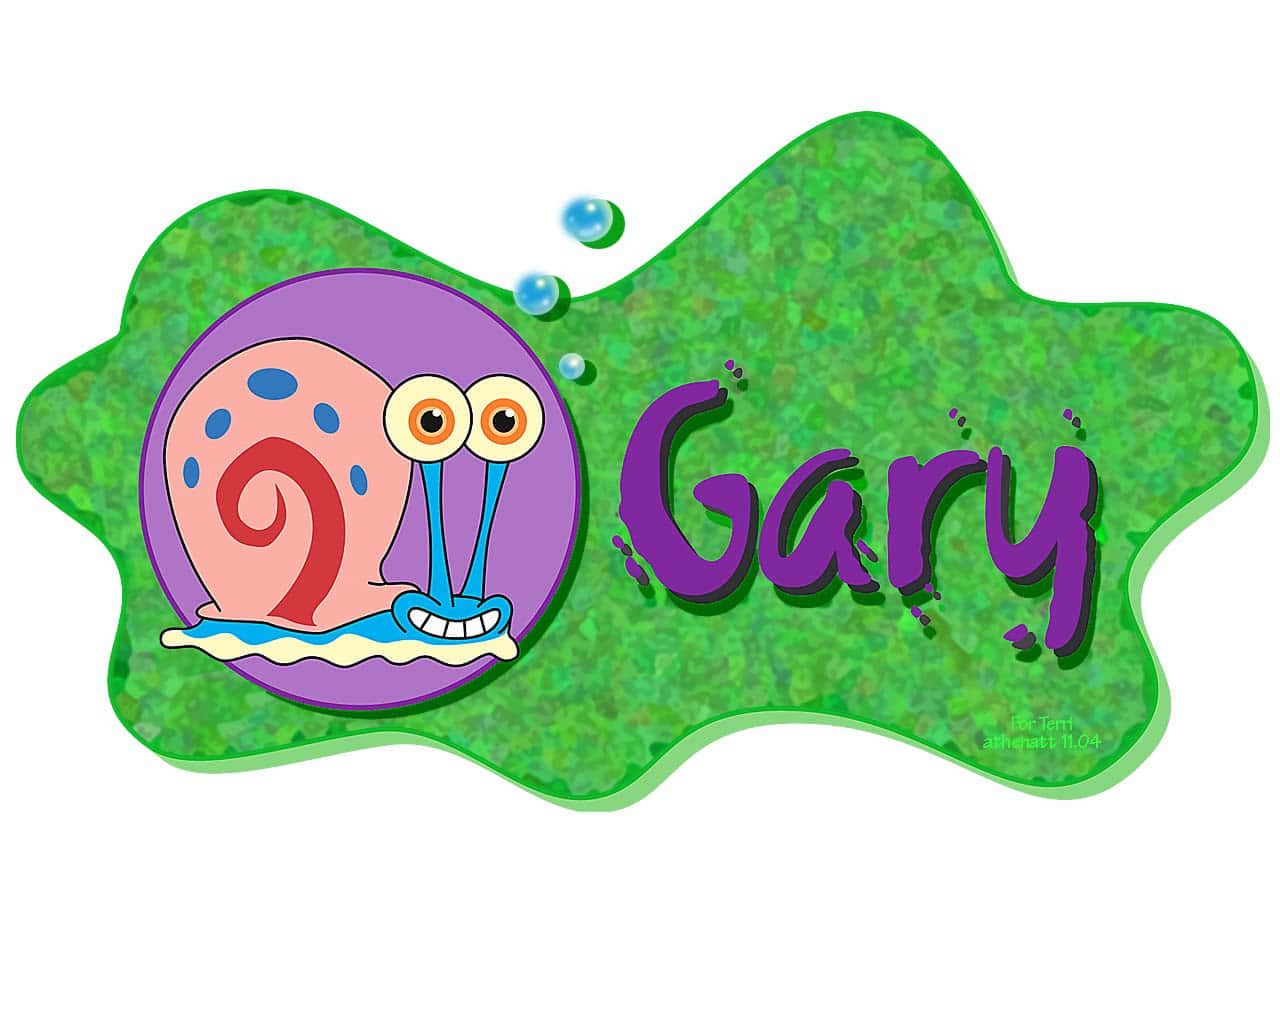 Gary the Snail exploring the underwater world Wallpaper